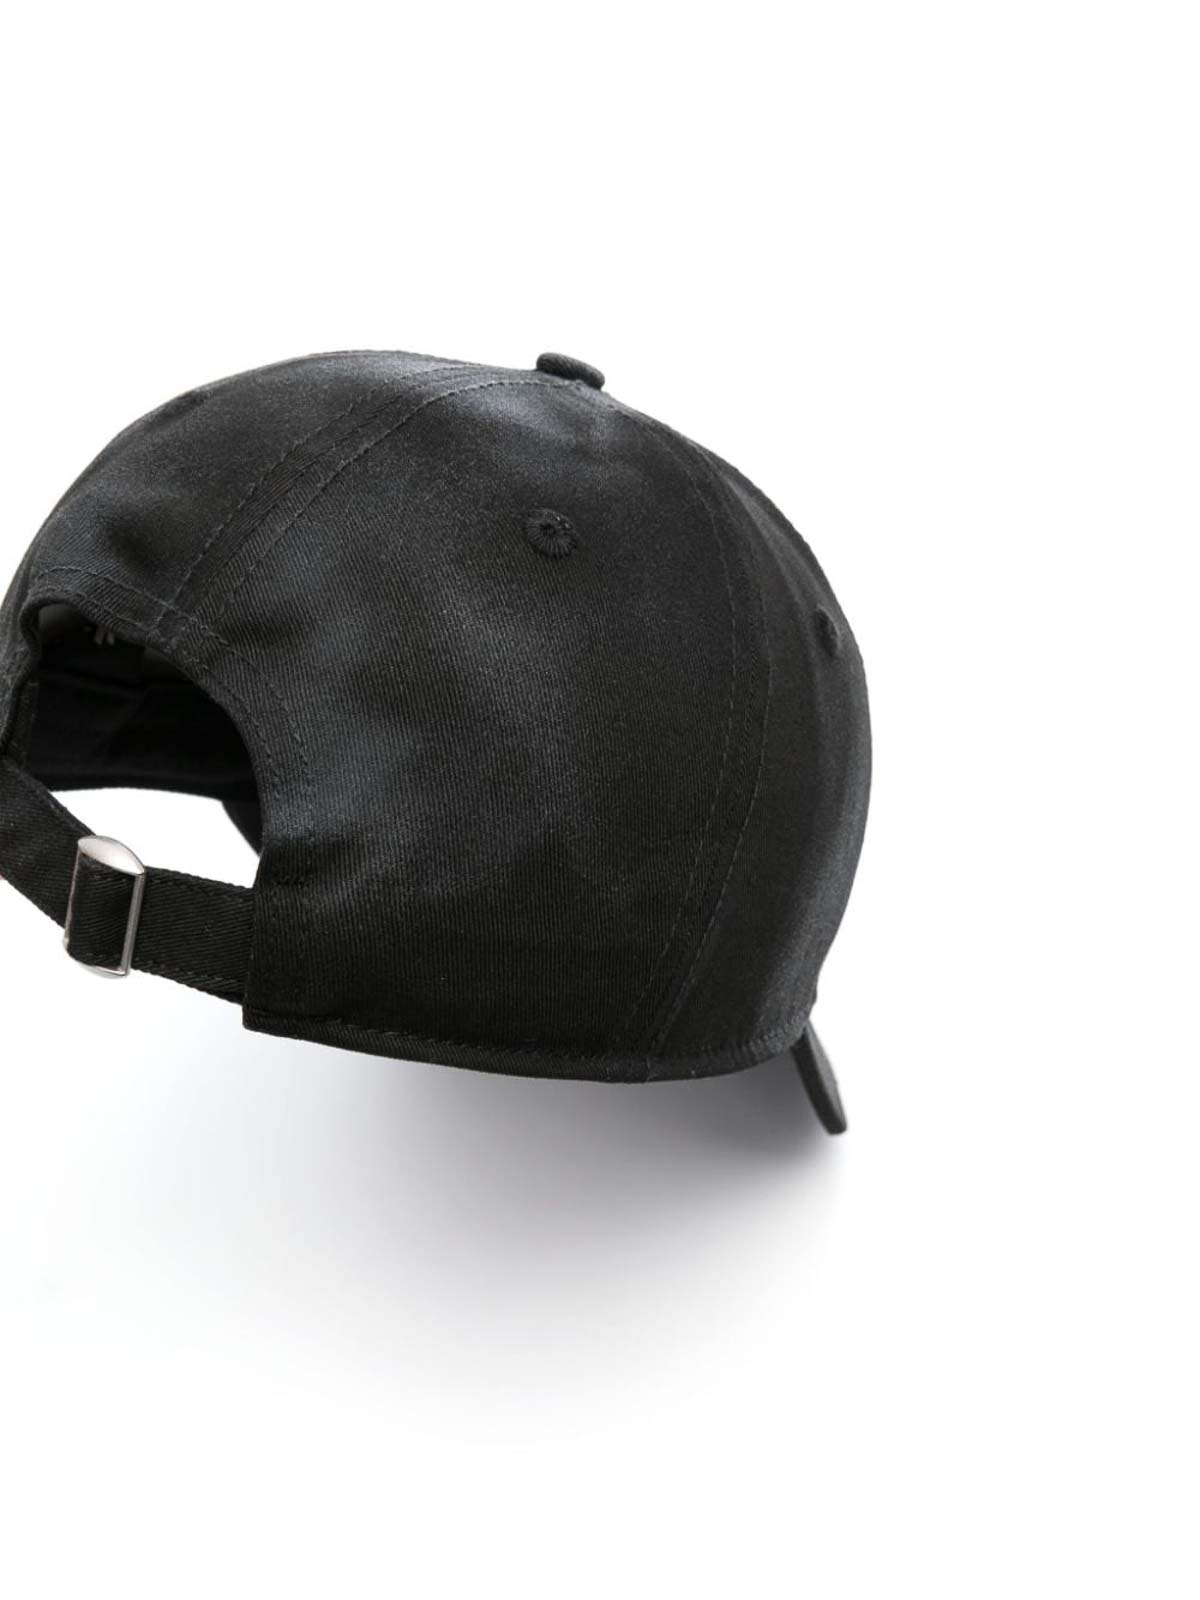 Shop 44 Label Group Hat Black